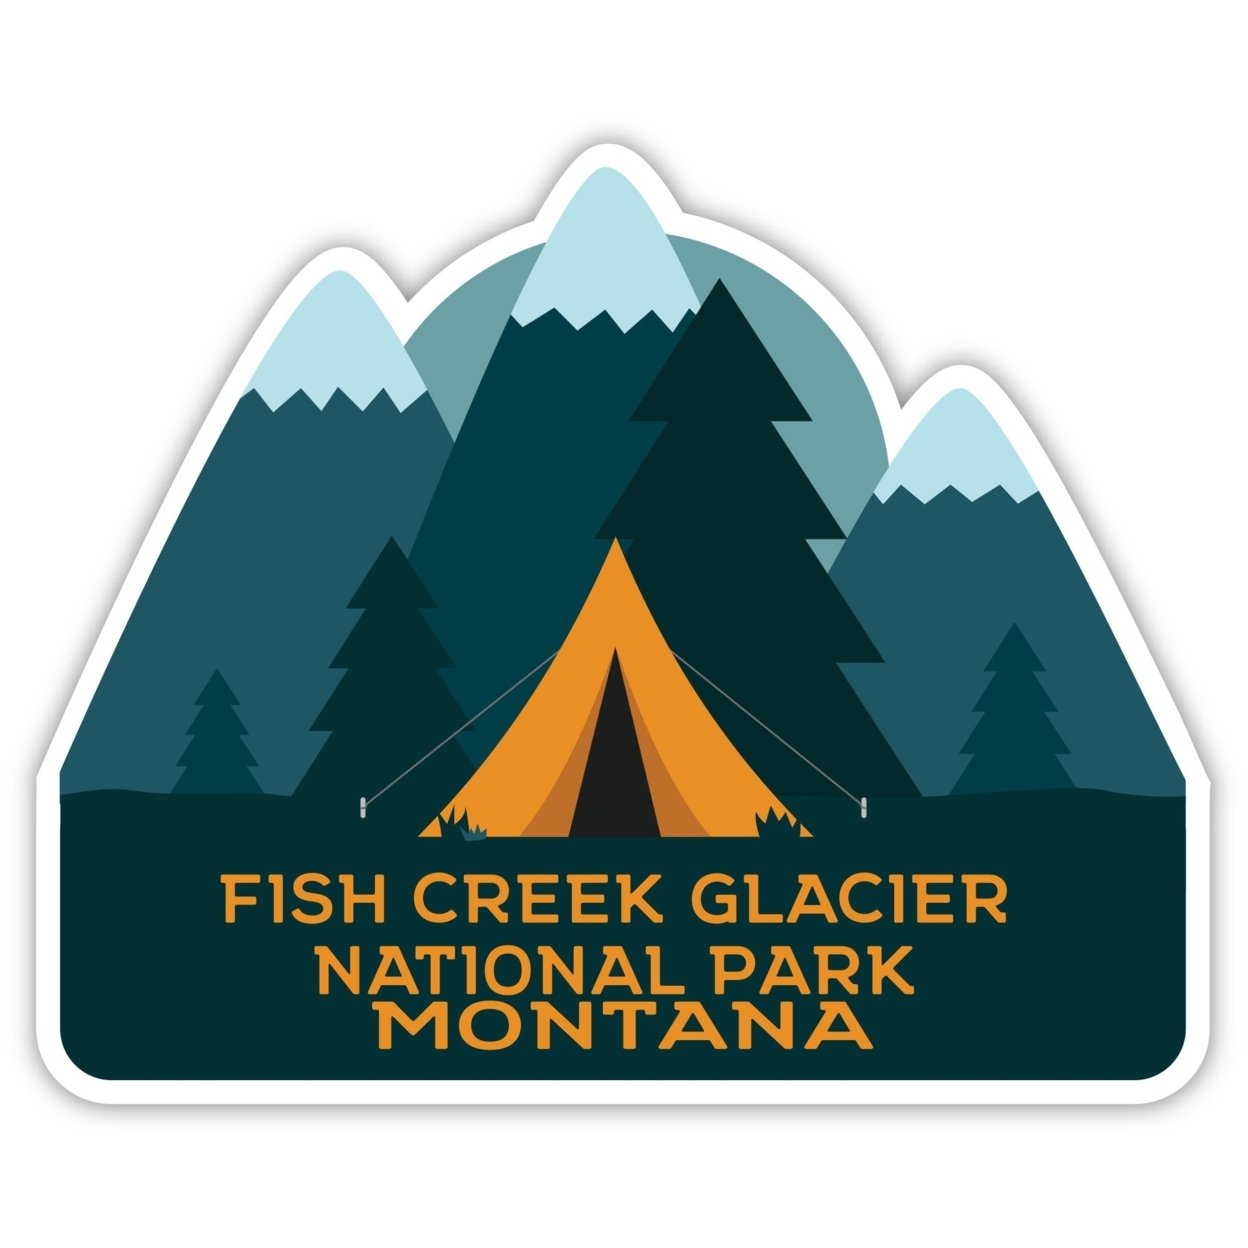 Fish Creek Glacier National Park Montana Souvenir Decorative Stickers (Choose Theme And Size) - 4-Pack, 6-Inch, Tent